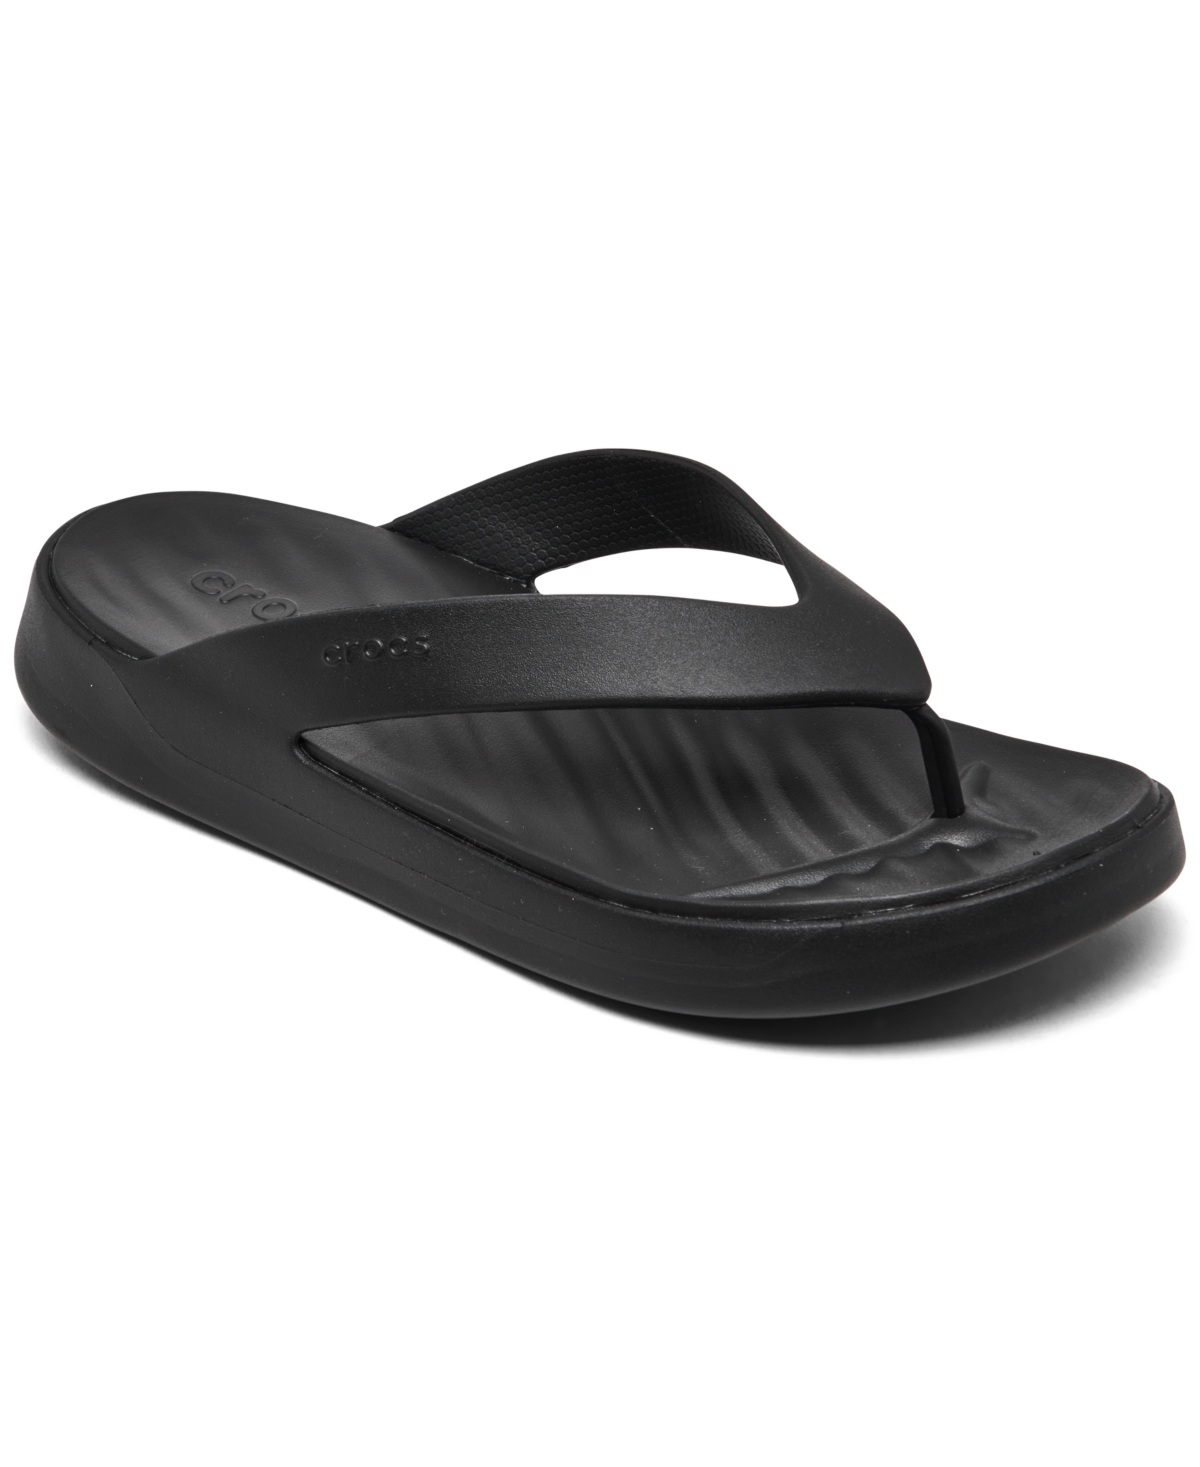 Crocs Women's Getaway Low Casual Flip-flop Sandals From Finish Line In Black